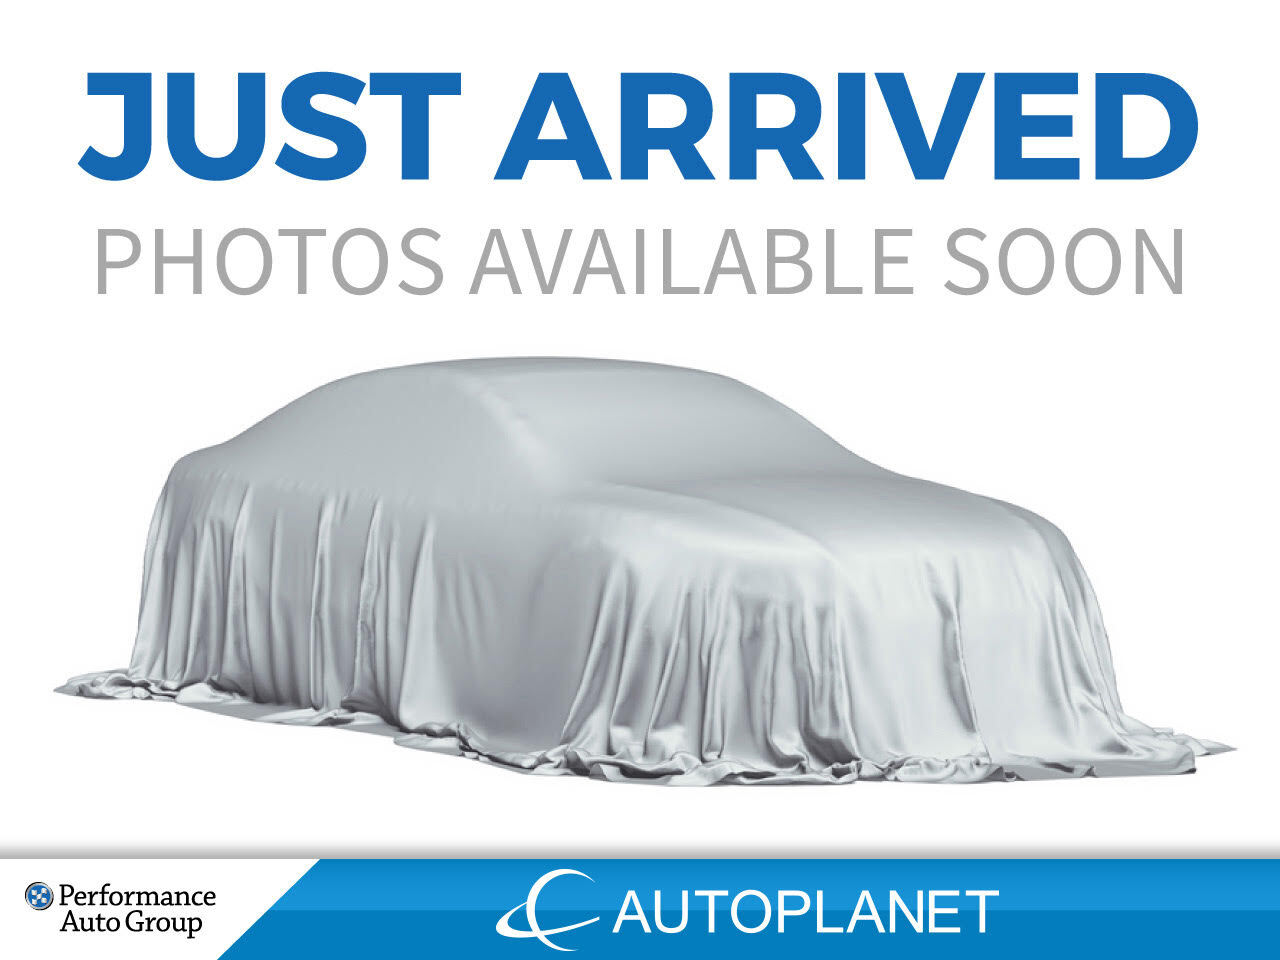 2020 Chevrolet Silverado 1500 LT 4x4, Crew Cab, Back Up Cam, Heated Seats!